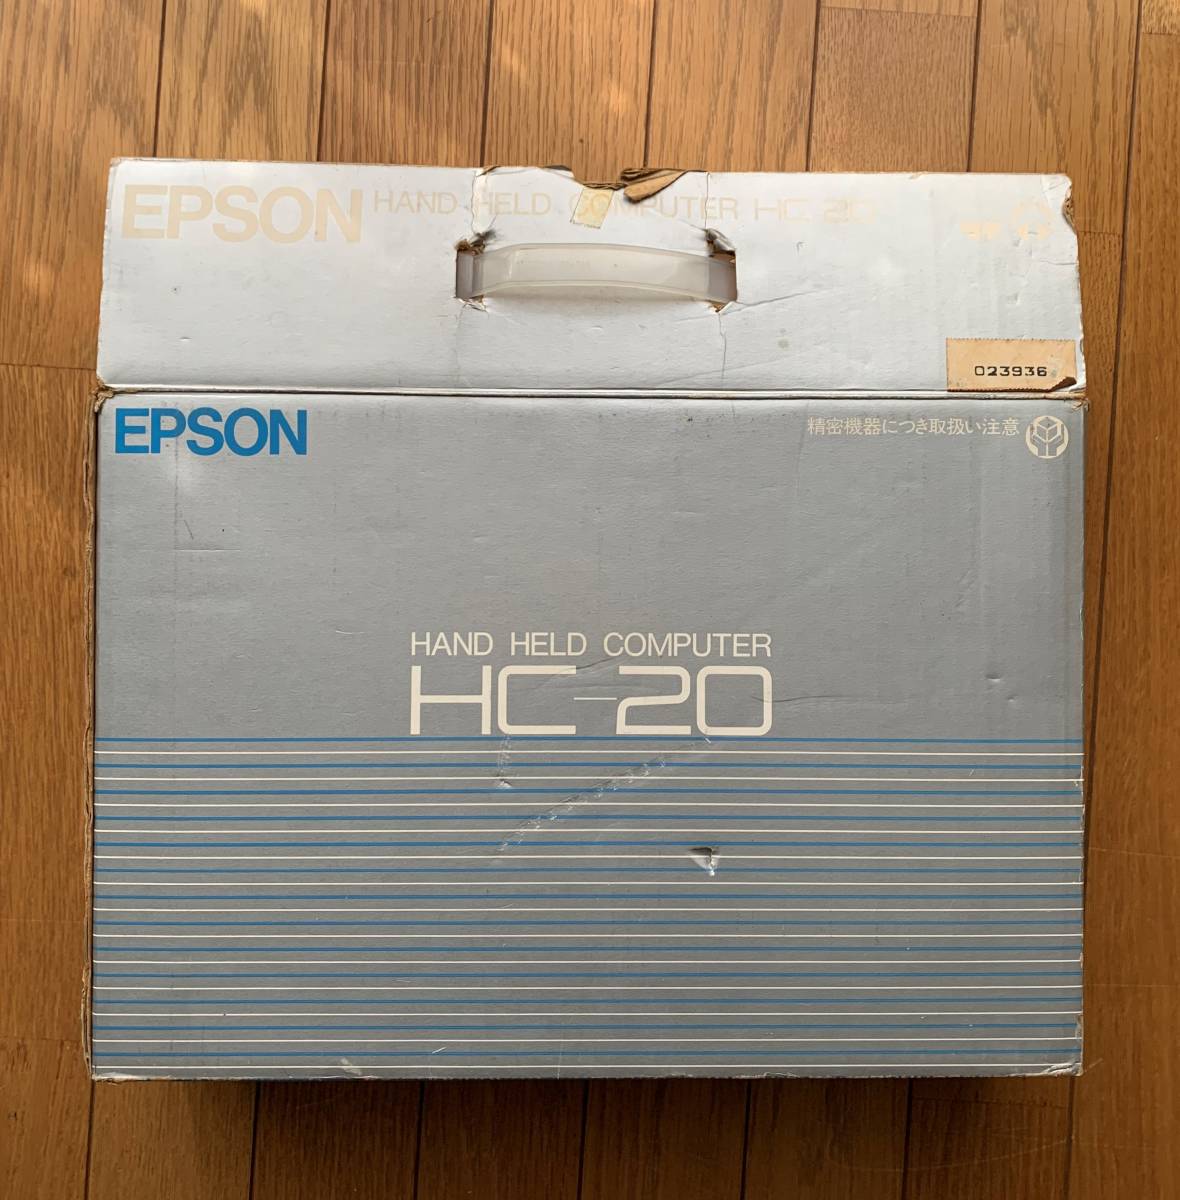 [ Junk ]EPSON HAND HELD COMPUTER HC-20